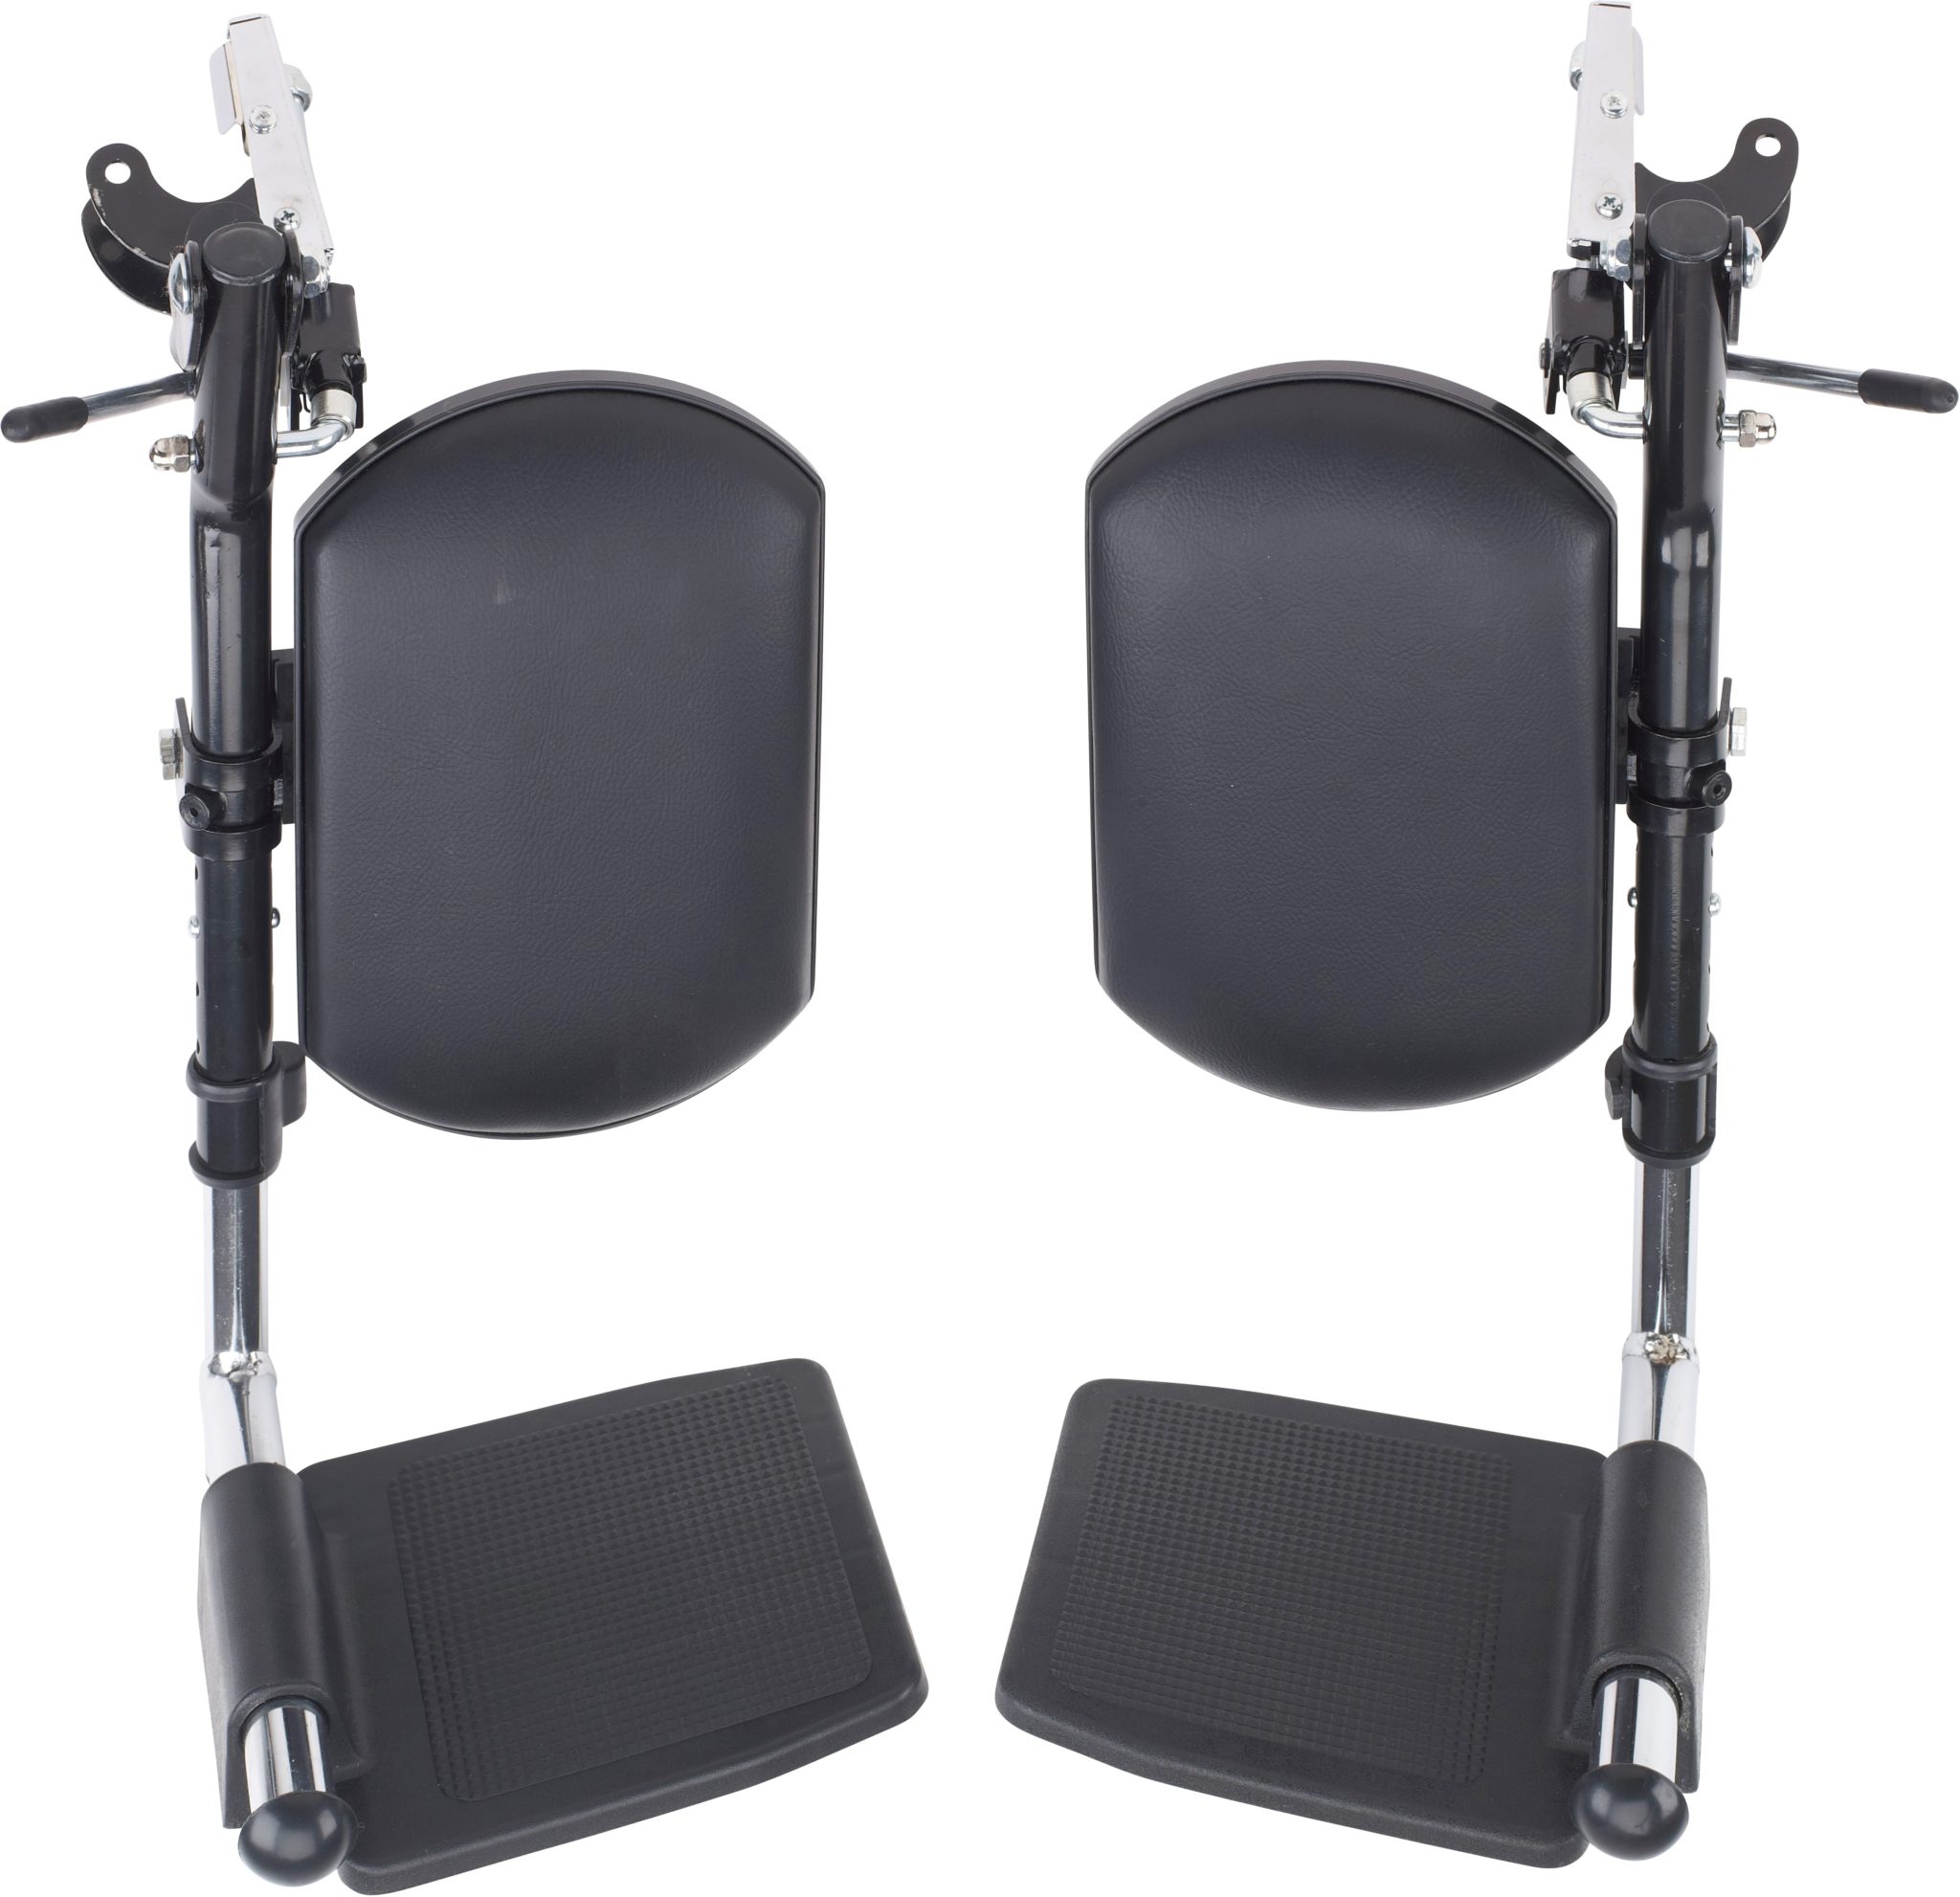 Drive Wheelchair Elevating Legrest - Corner Home Medical